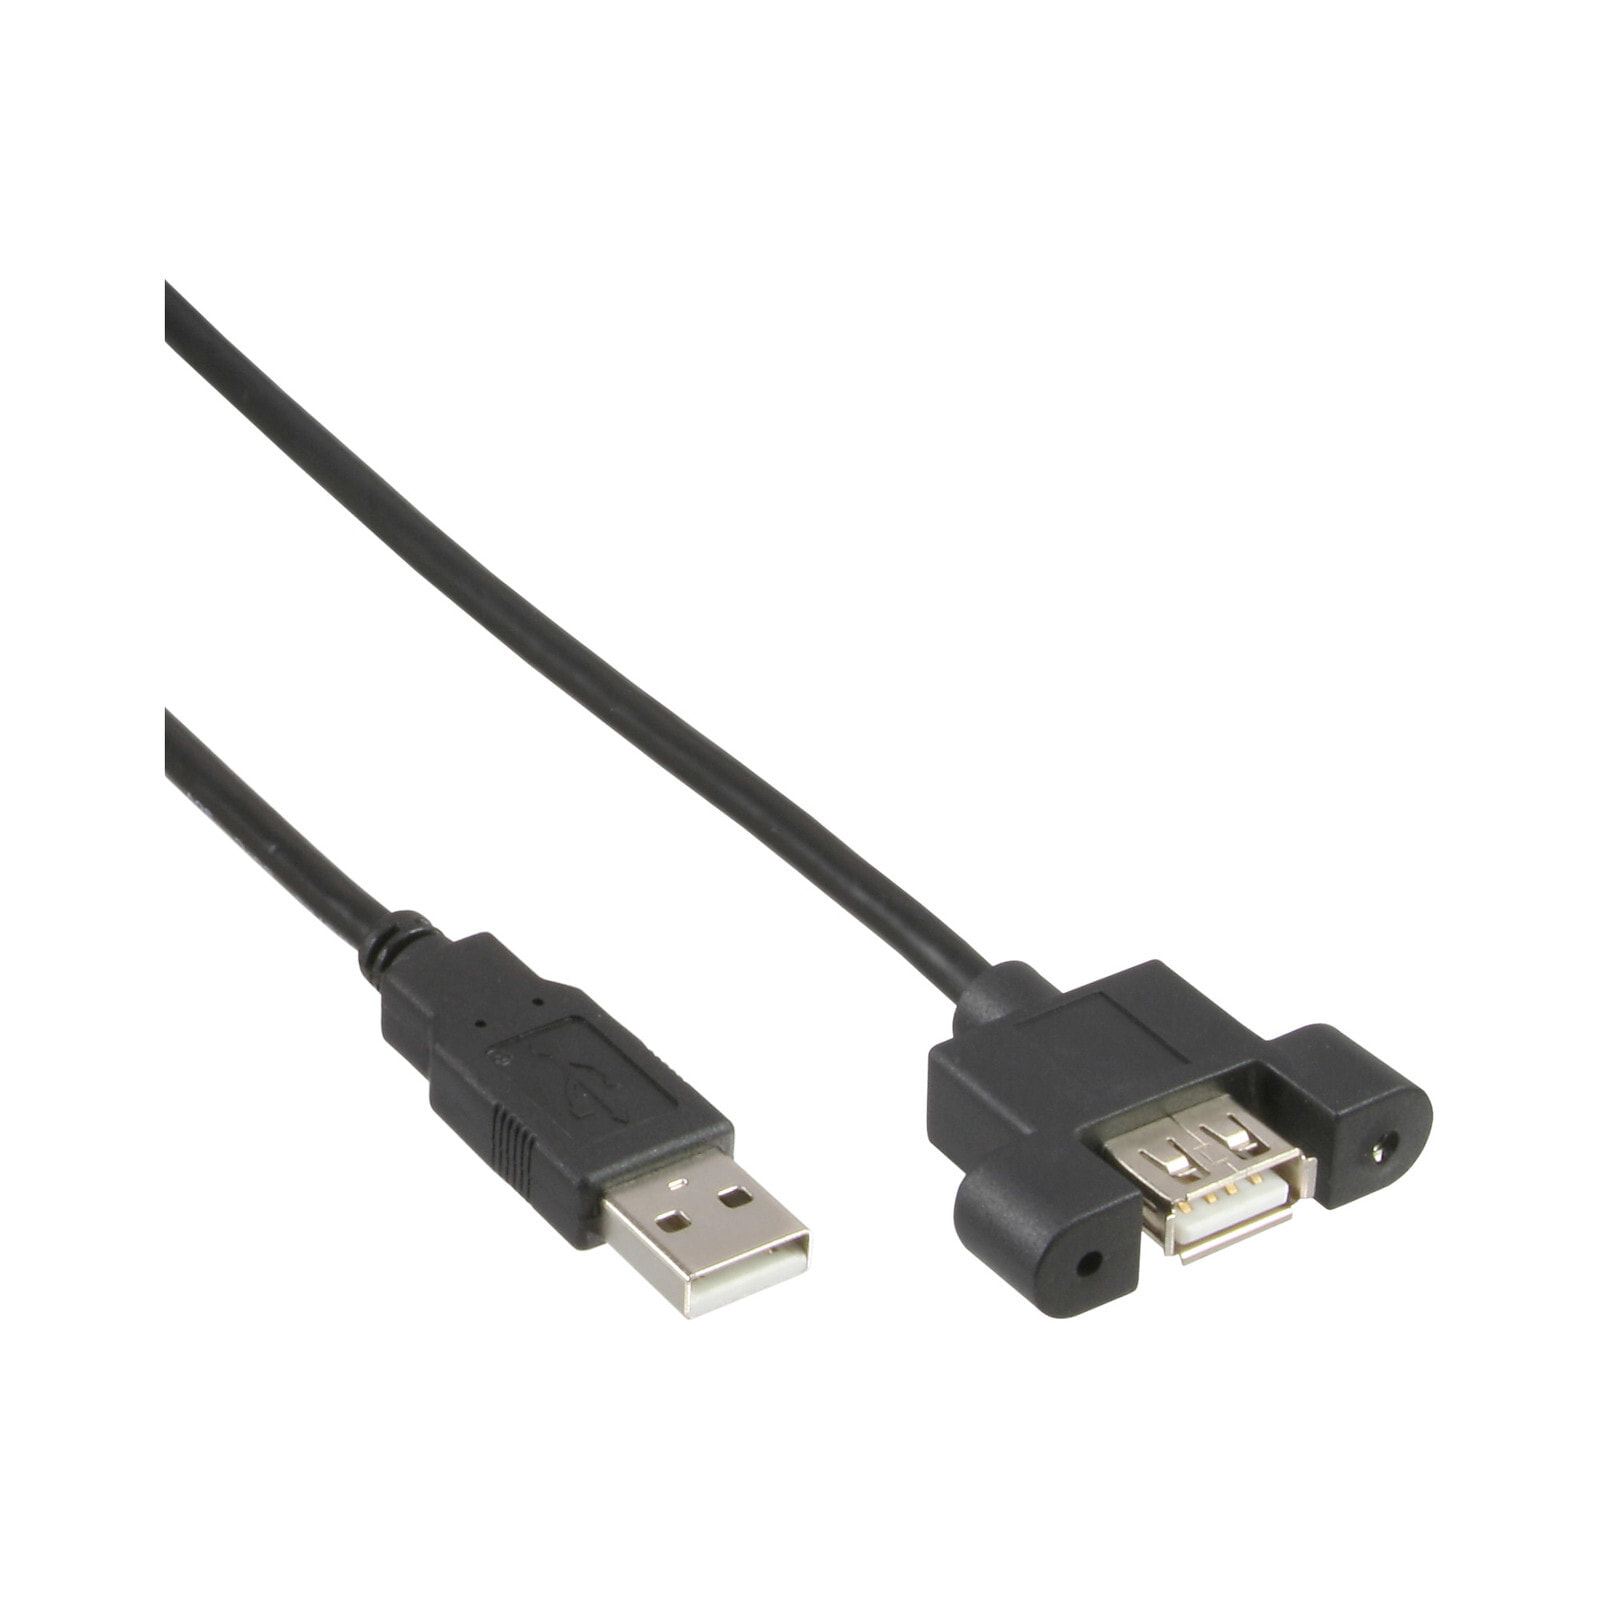 100pcs. Bulk-Pack USB 2.0 Cable A male to A female for slot bracket 0.6m - 0.6 m - USB A - USB A - USB 2.0 - Black